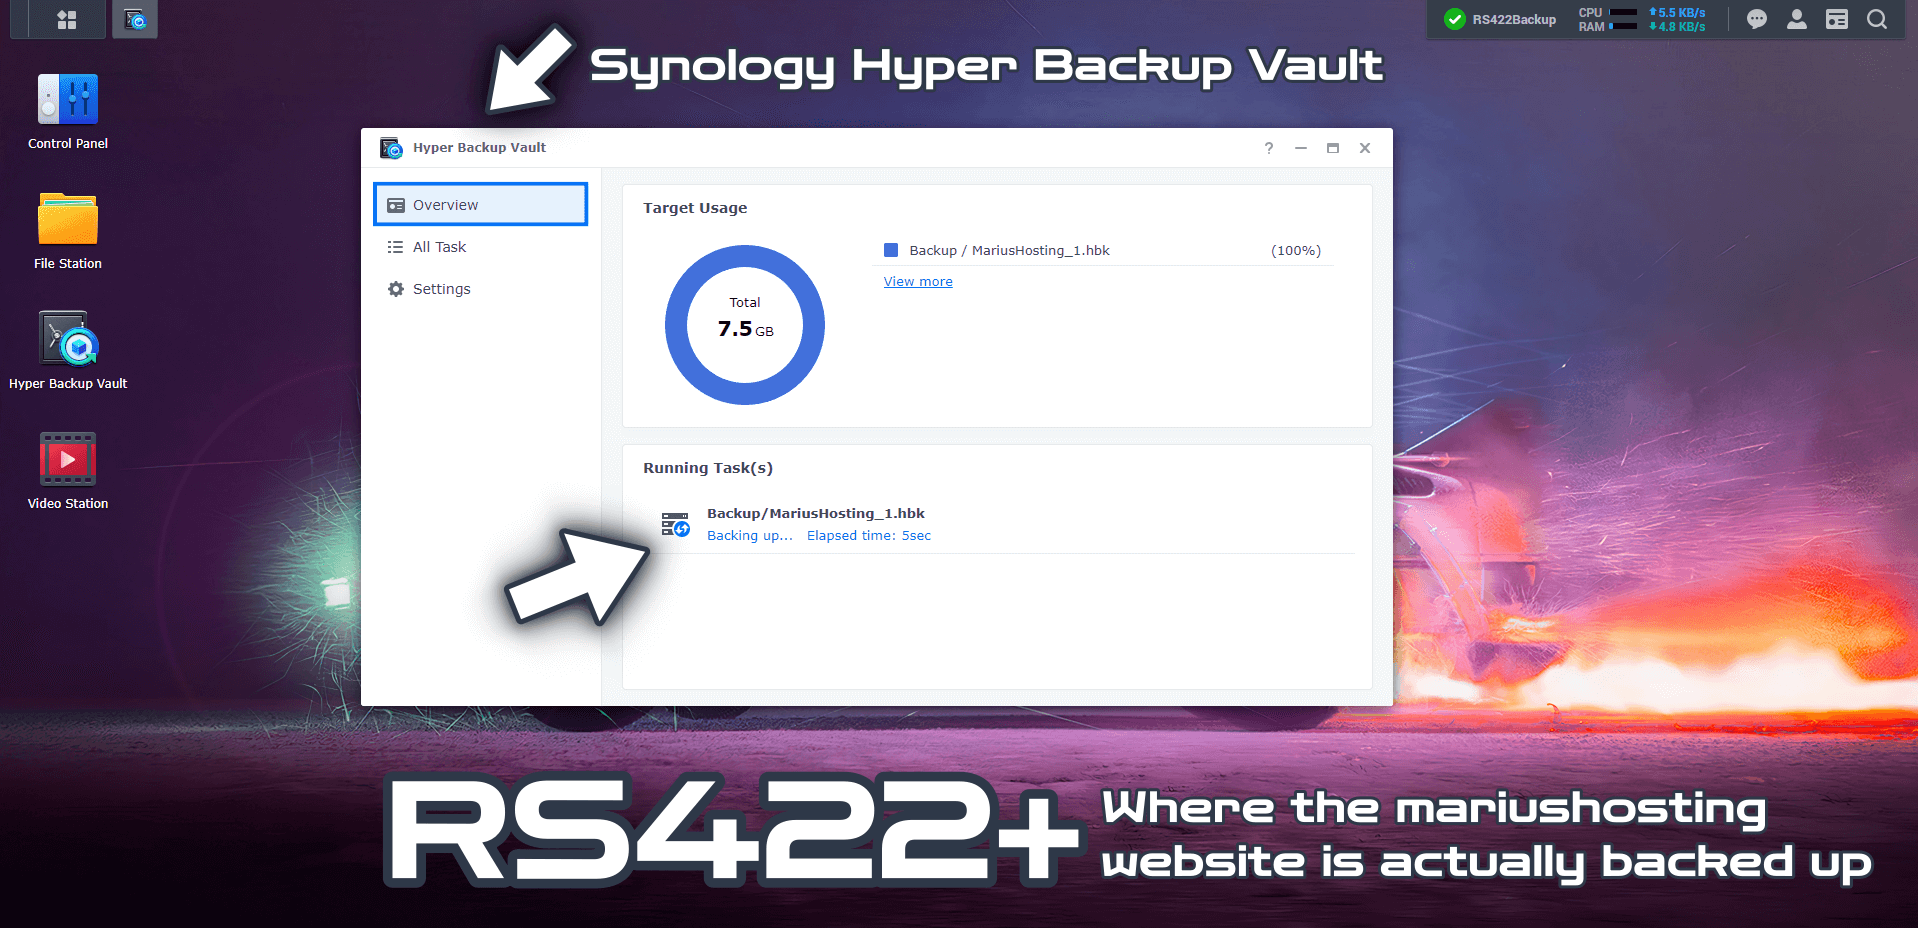 Synology NAS Backup Website 4